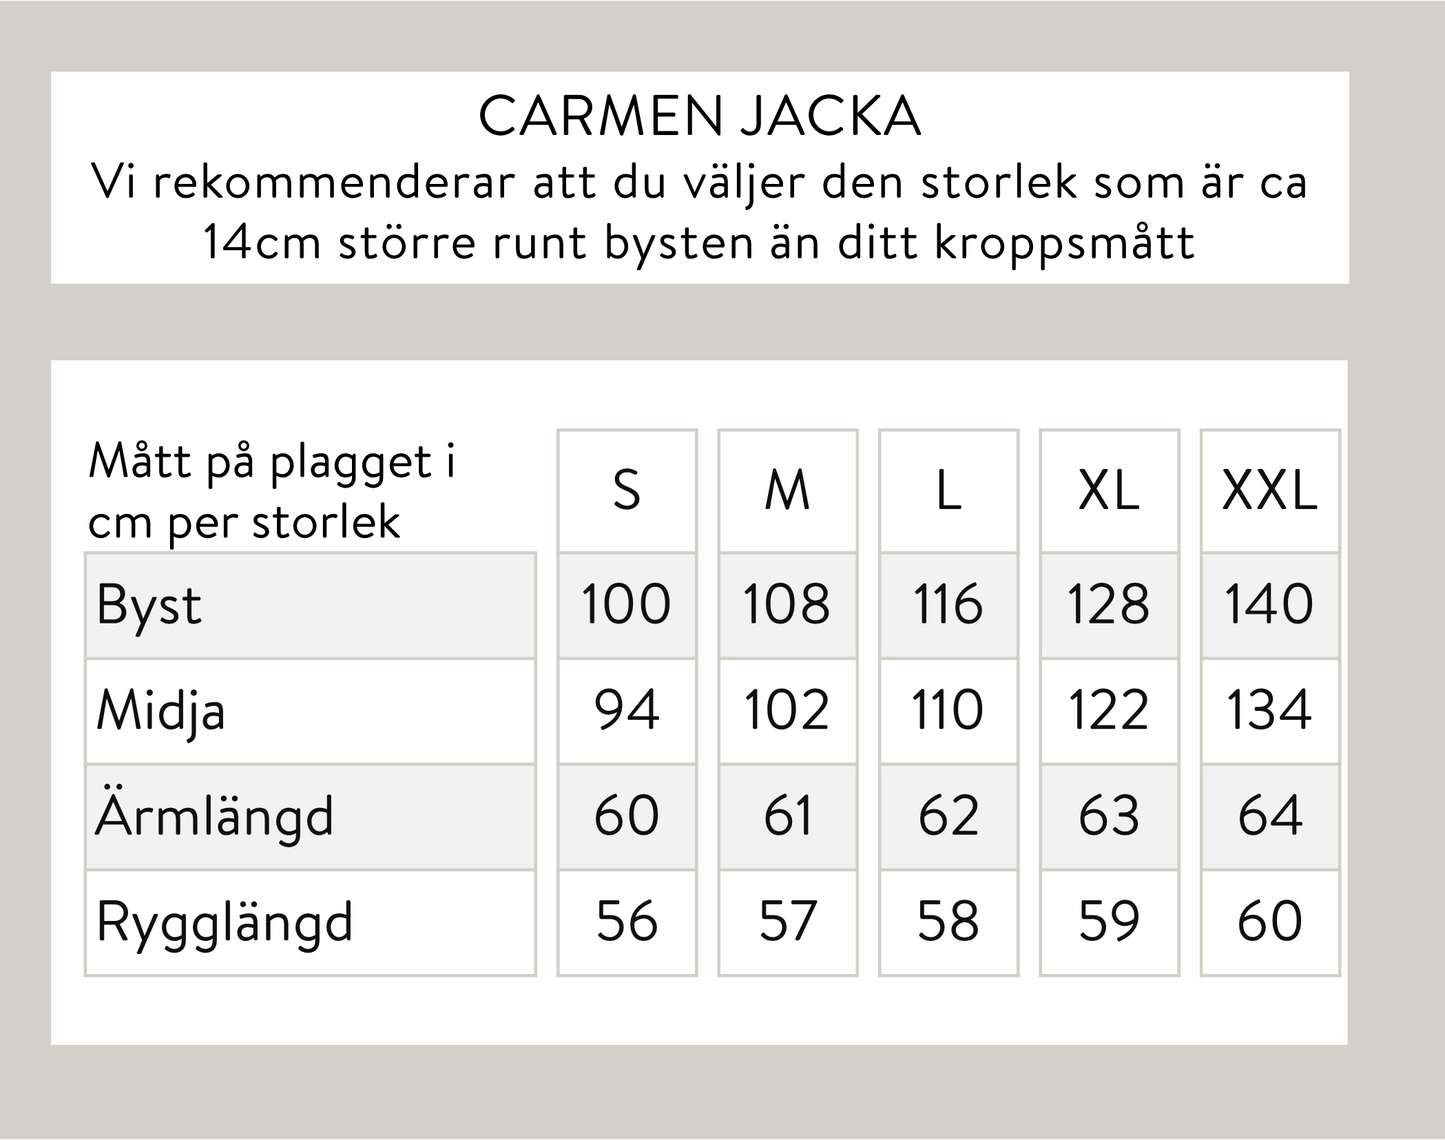 Carmen jacka - Svart